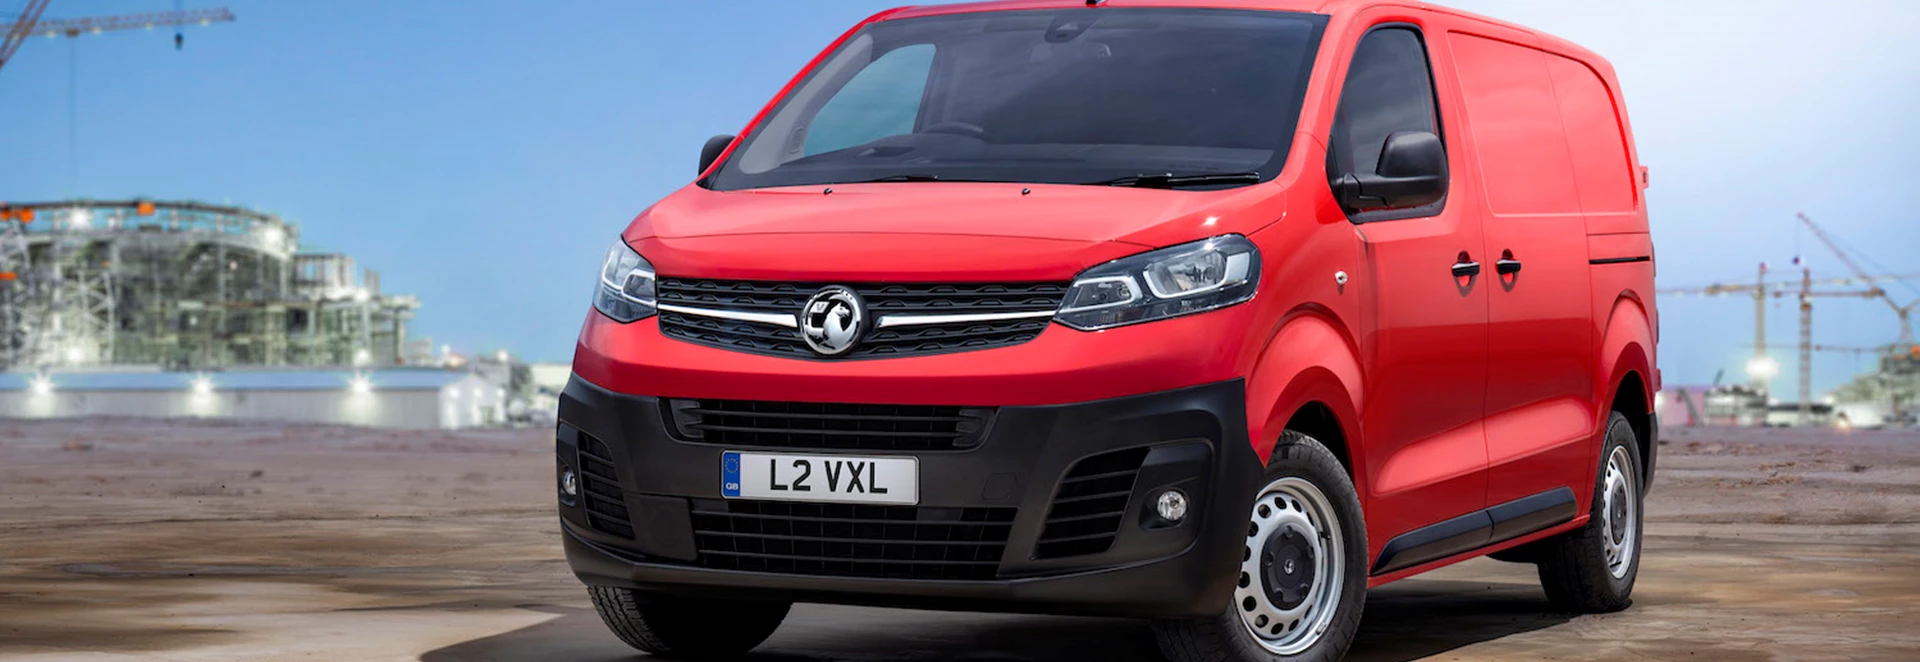 Vauxhall announces pricing for Vivaro van